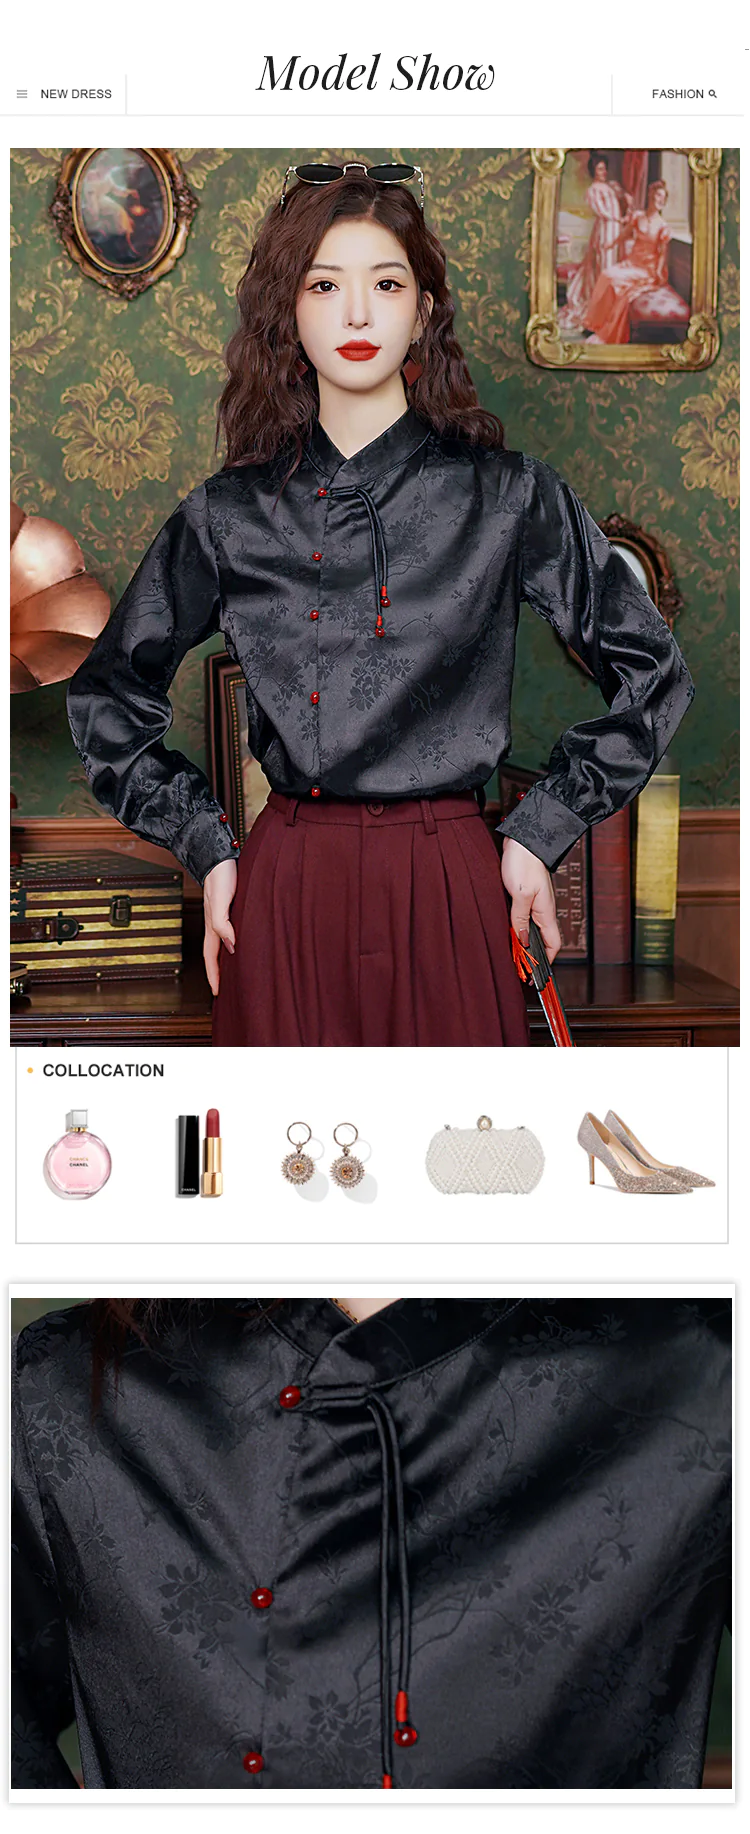 Fashion-Black-Long-Sleeve-Jacquard-Shirt-Spring-Fall-Casual-Blouse-Top12